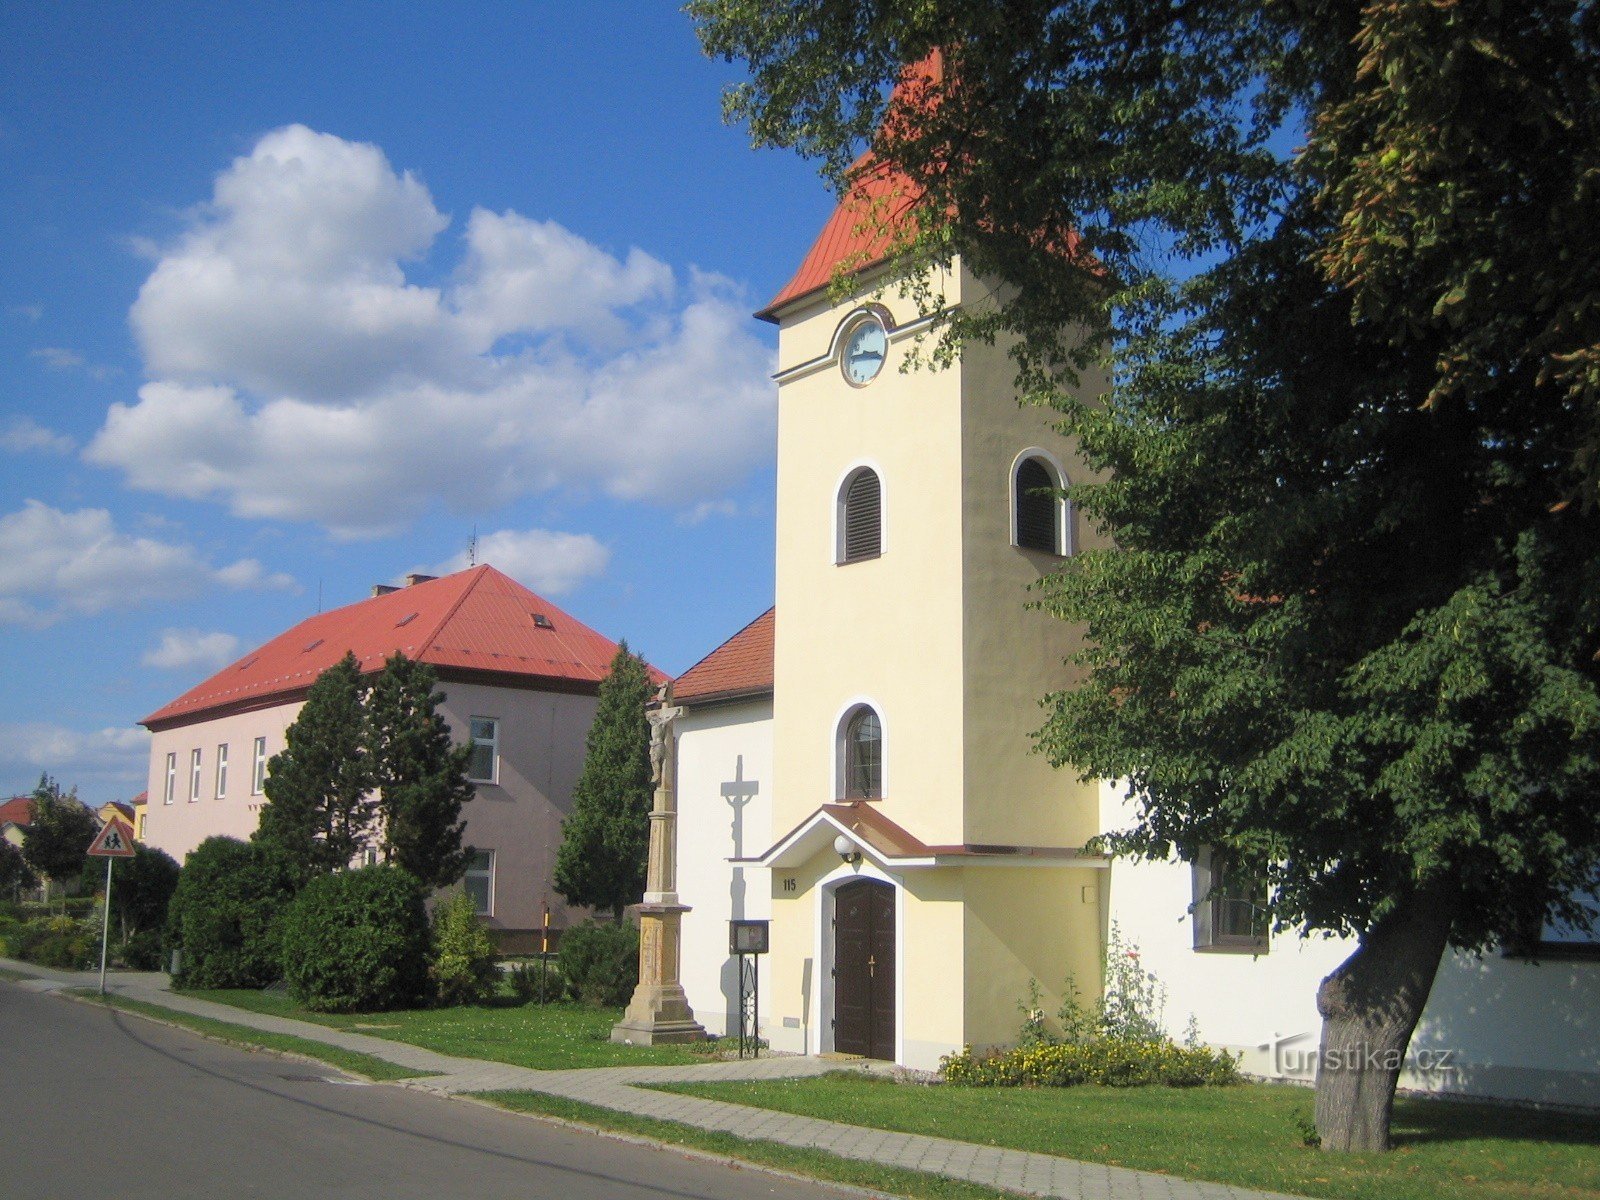 Knežpole - school and church